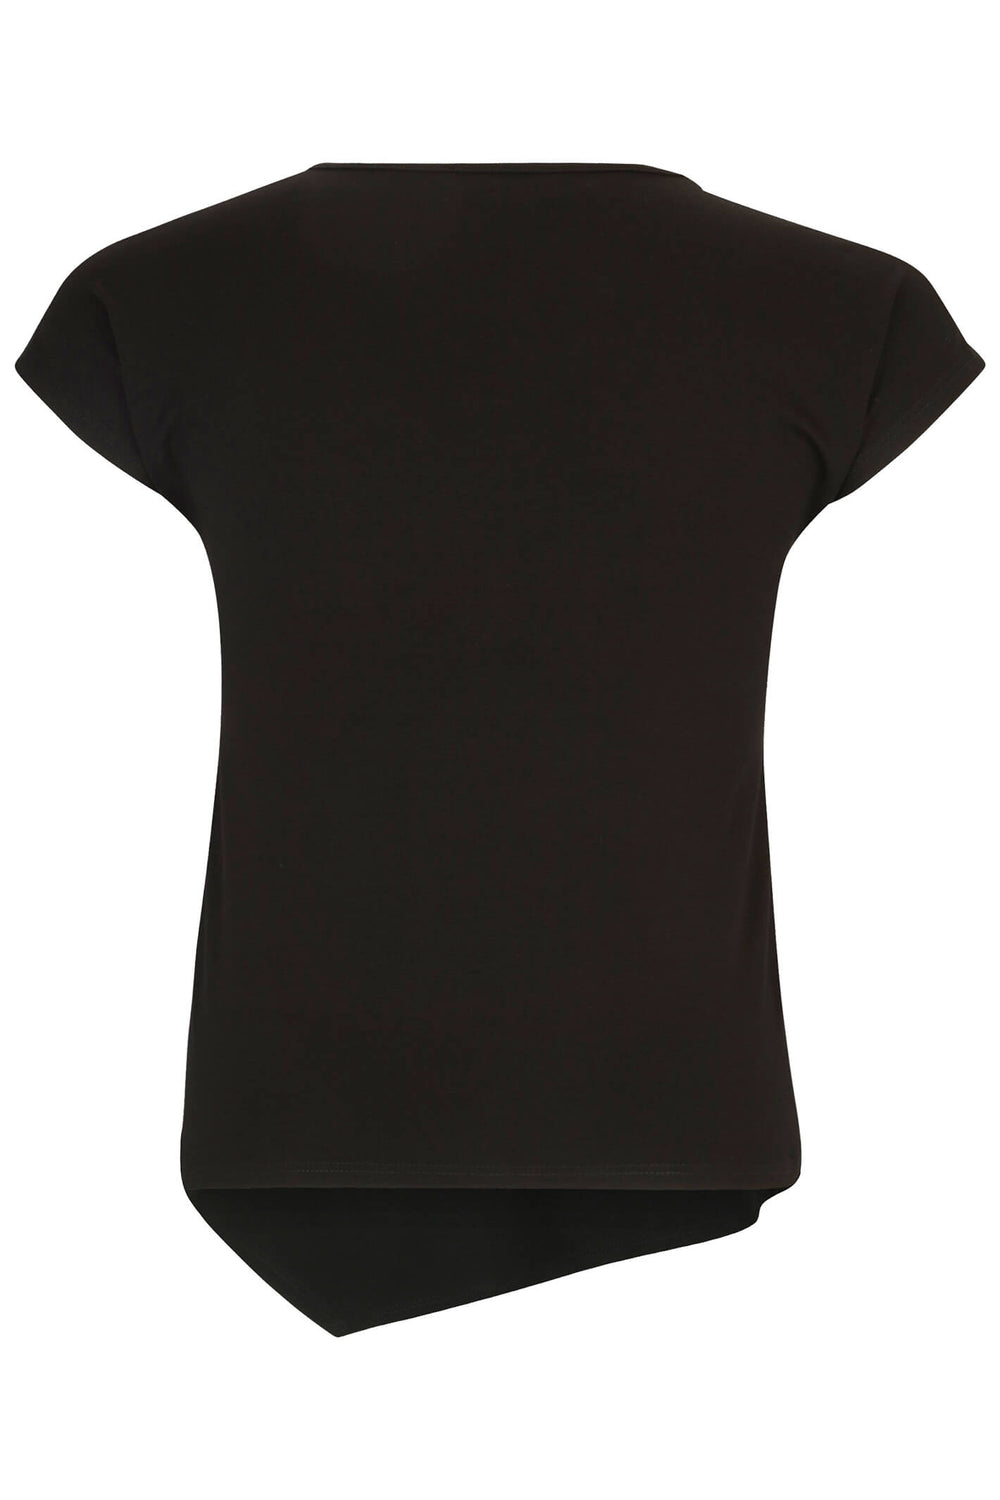 Doris Streich  537 270 Black Asymmetric Print Beaded T-Shirt - Shirley Allum Boutique